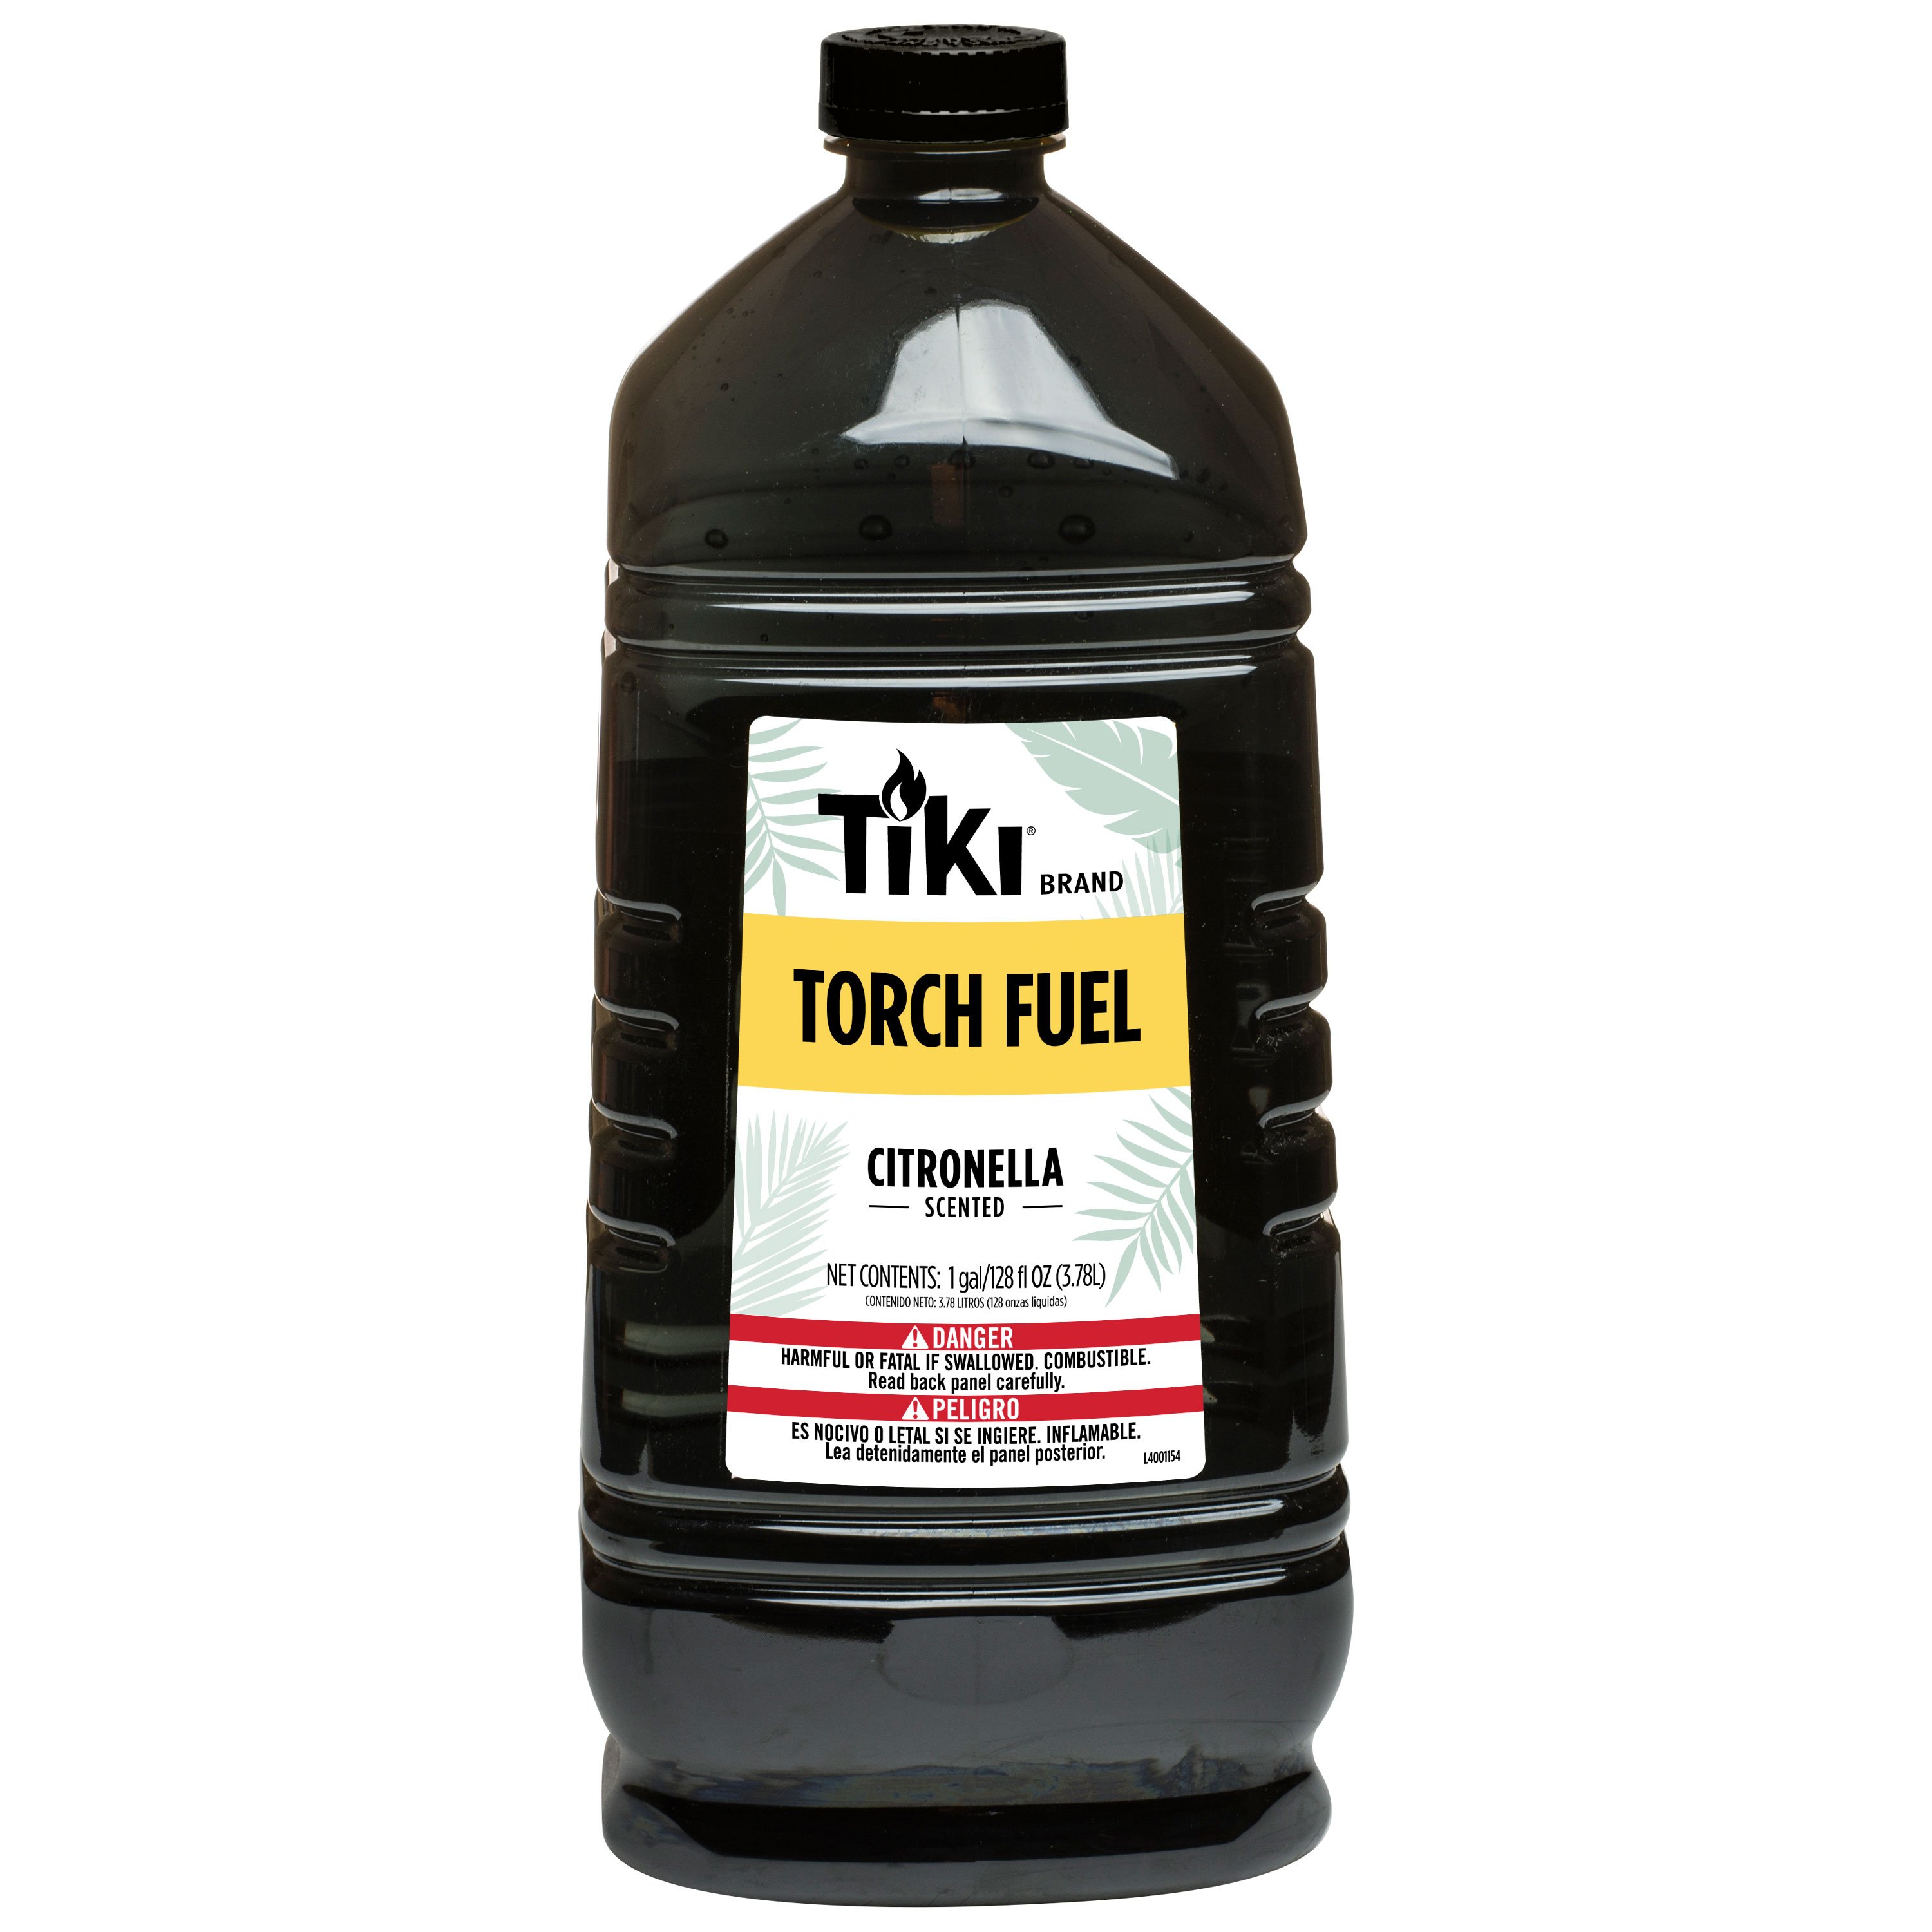 Tiki® Citronella Scented Torch Fuel, 128 oz. Bottle - 1216202